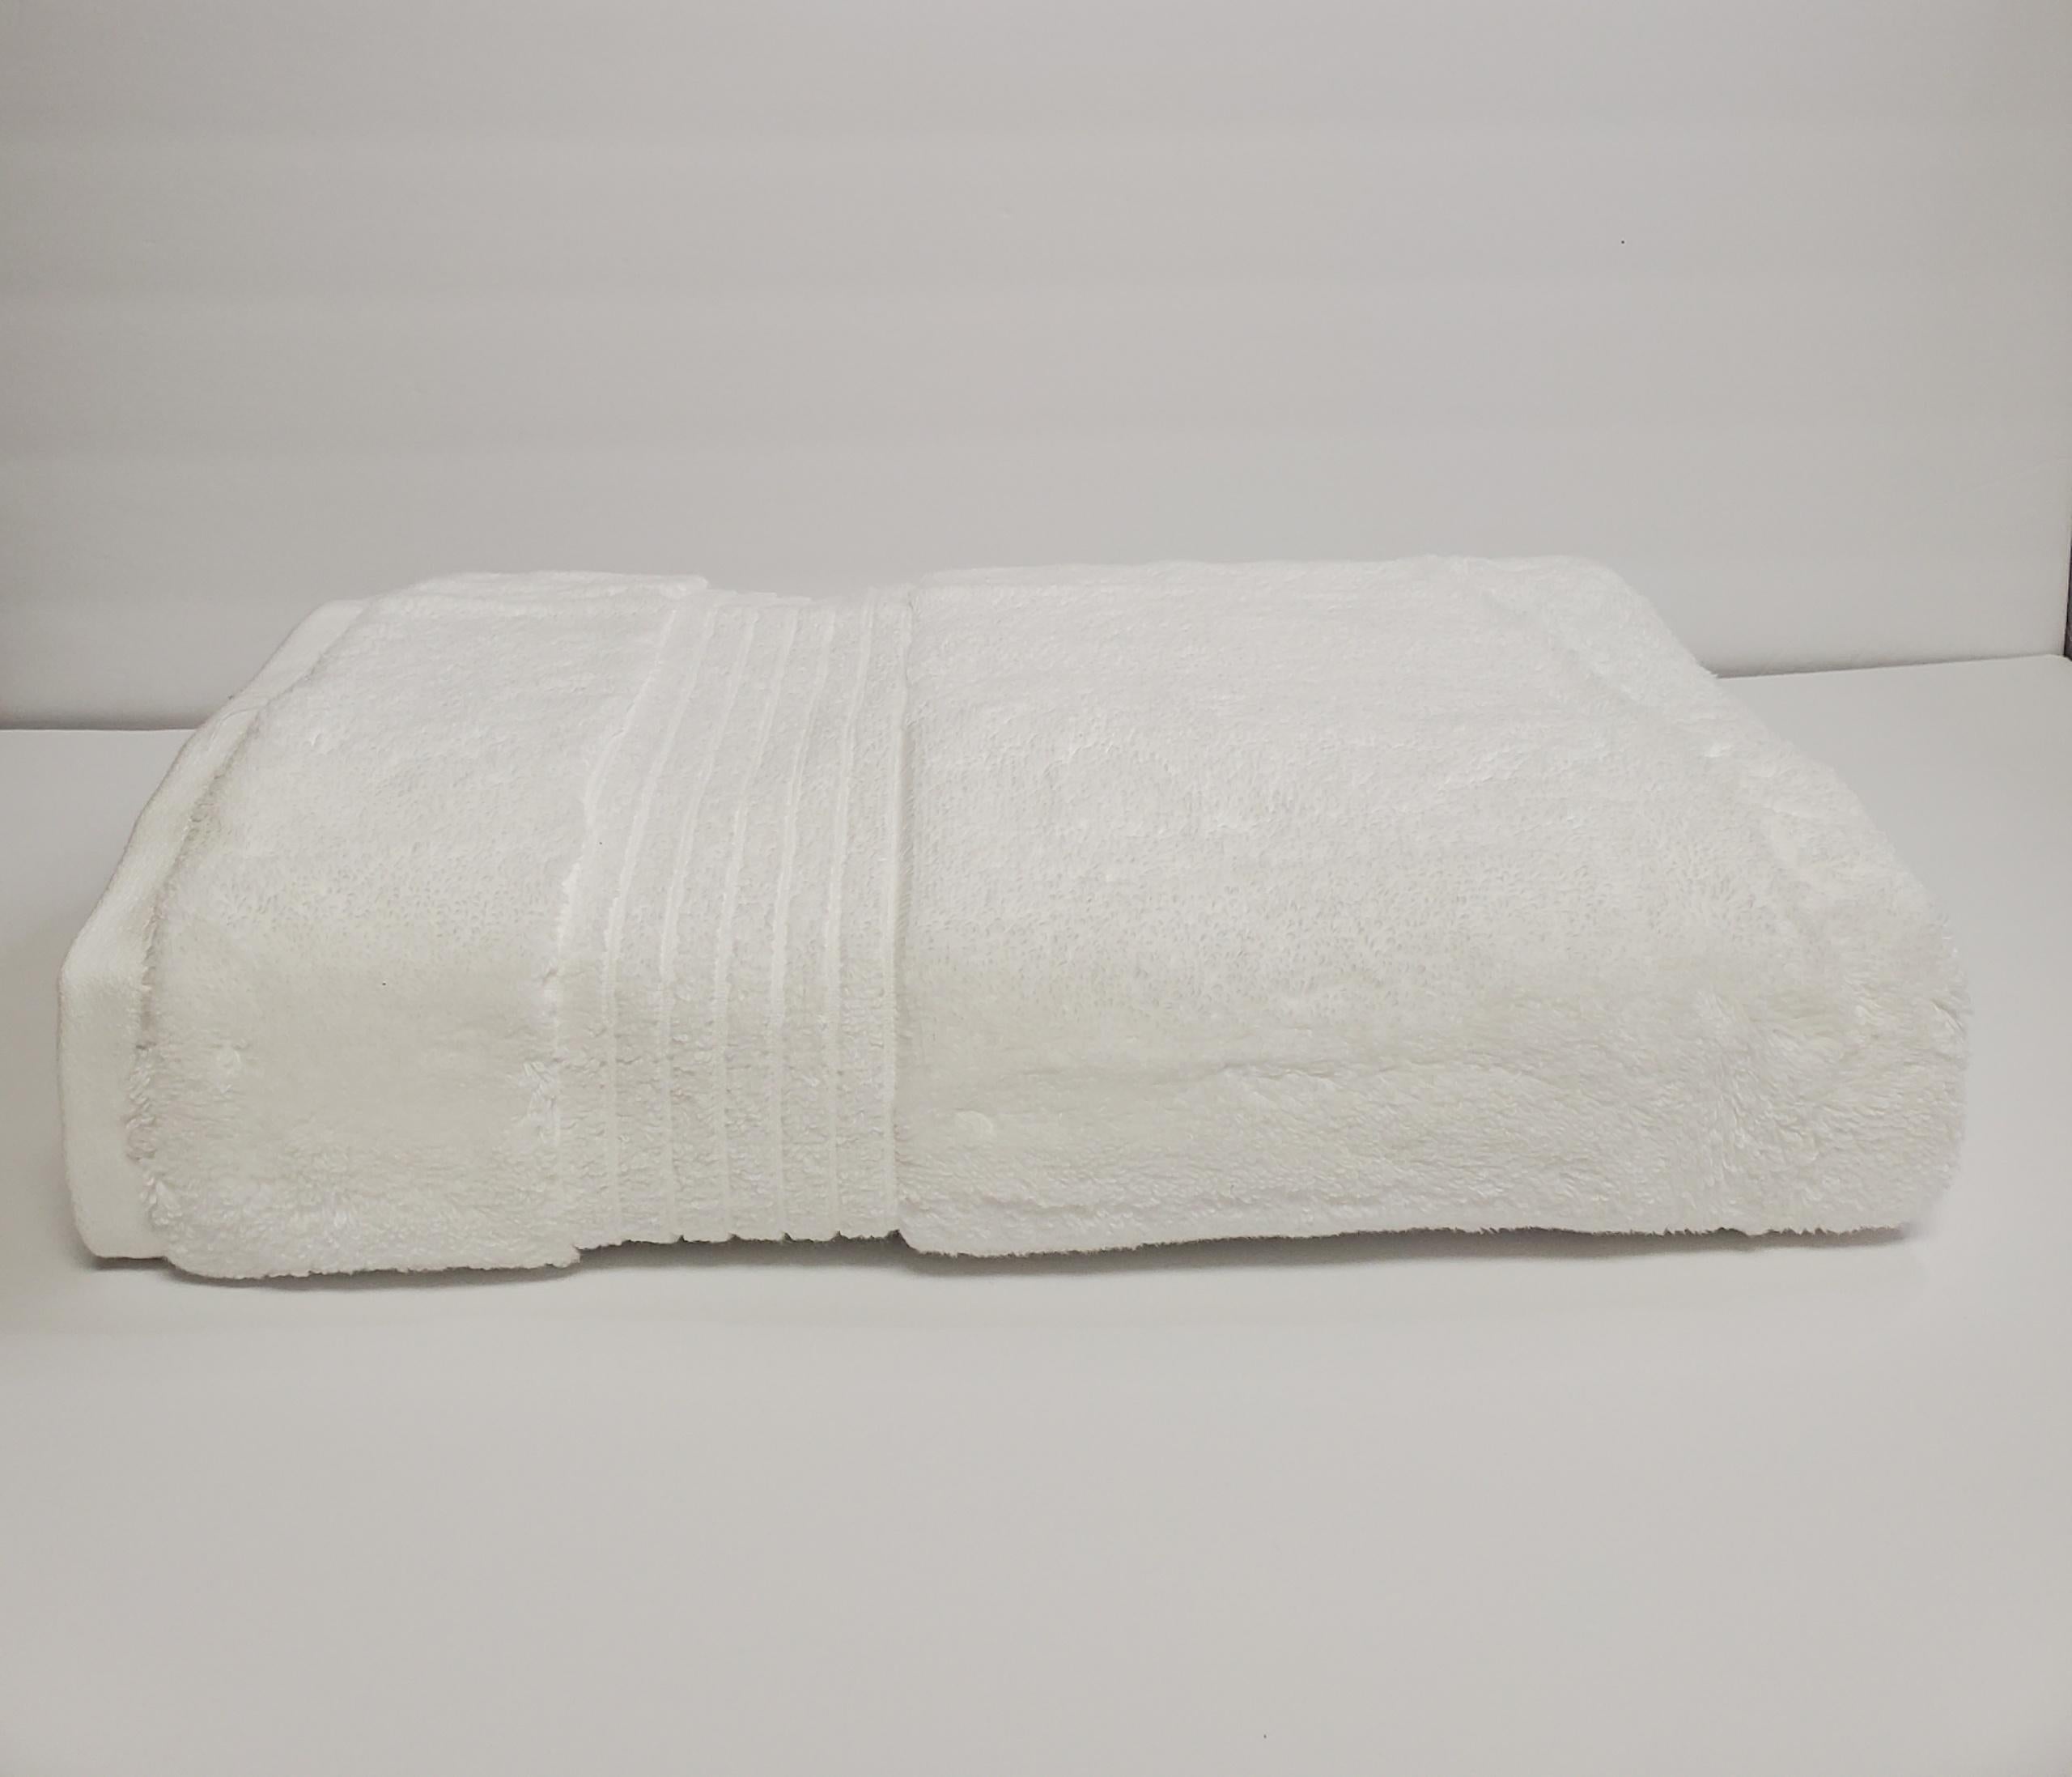 Luxurious Liz Claiborne Signature Plush Bath Towels